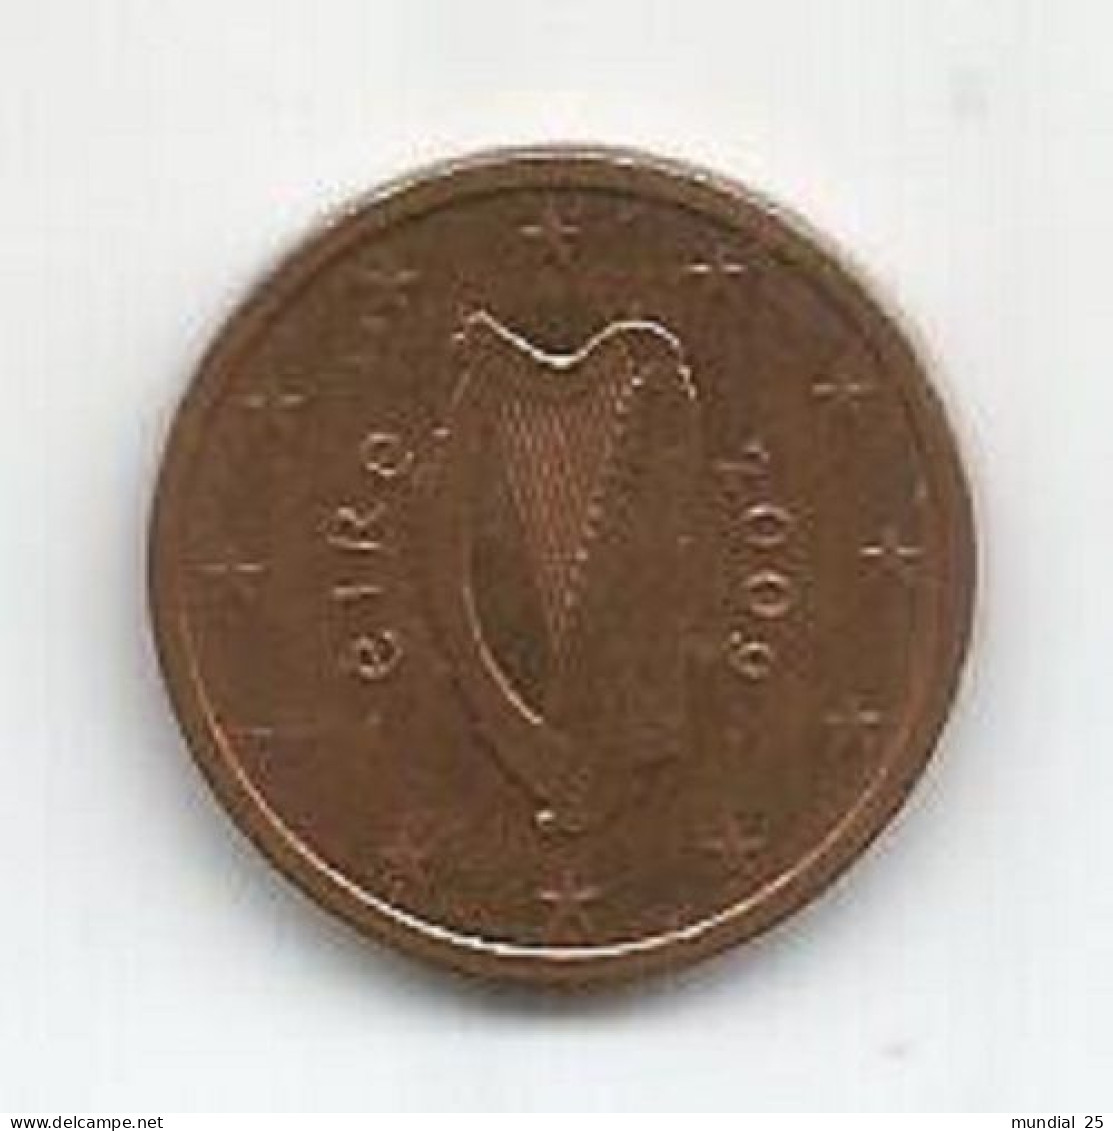 IRELAND 2 EURO CENT 2009 - Ireland